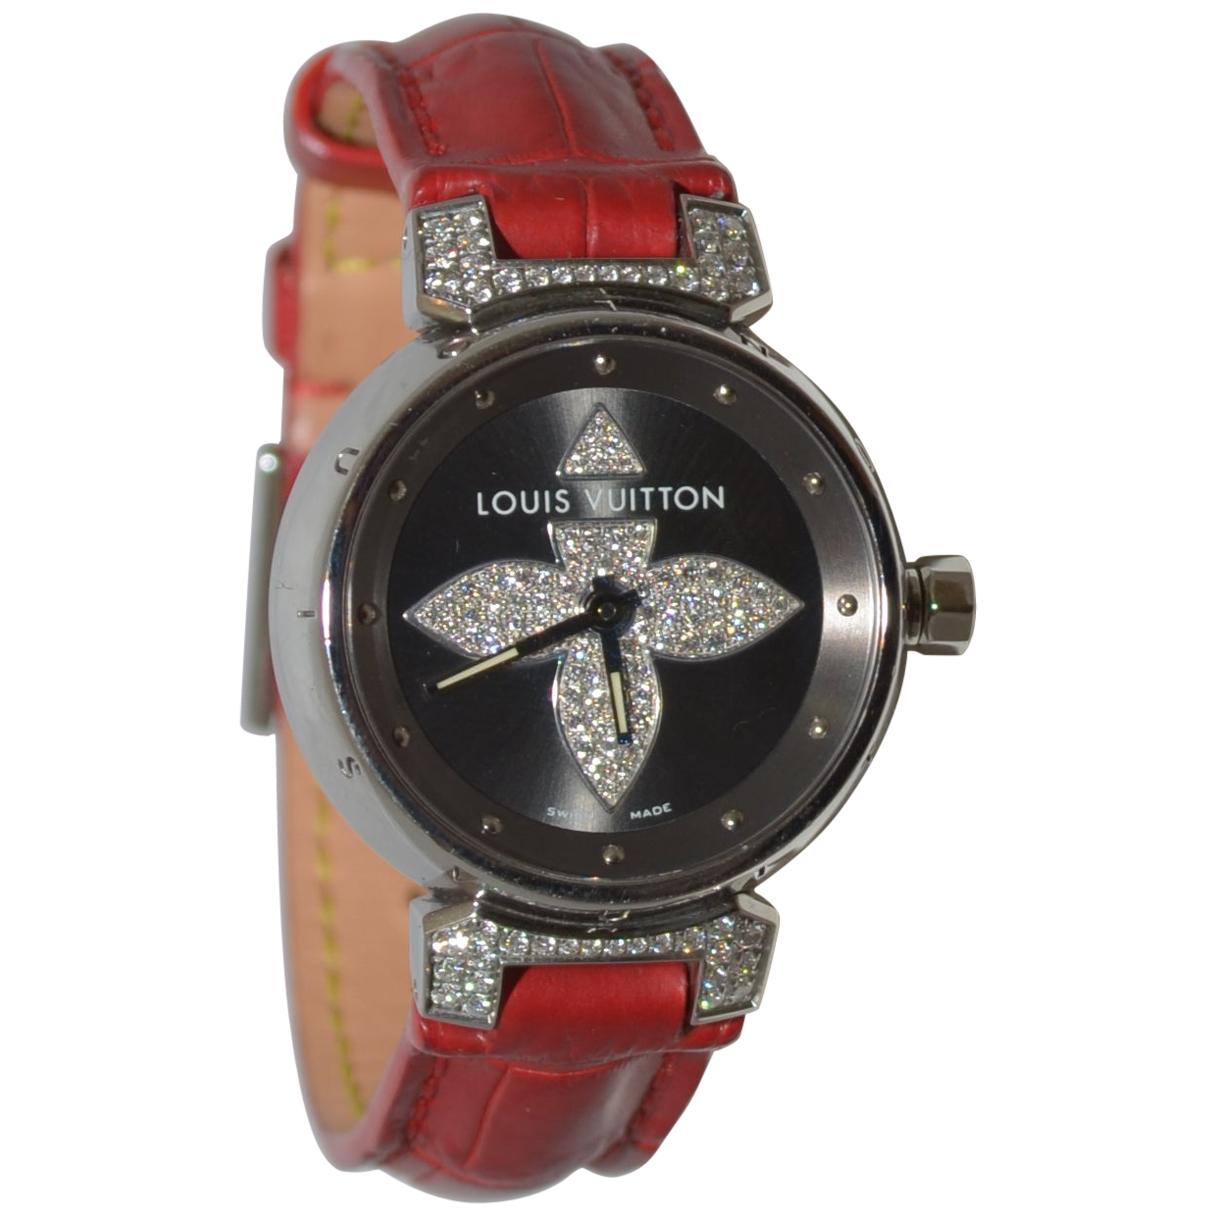 Louis Vuitton Tambour Bijoux Red Watch with Diamonds 